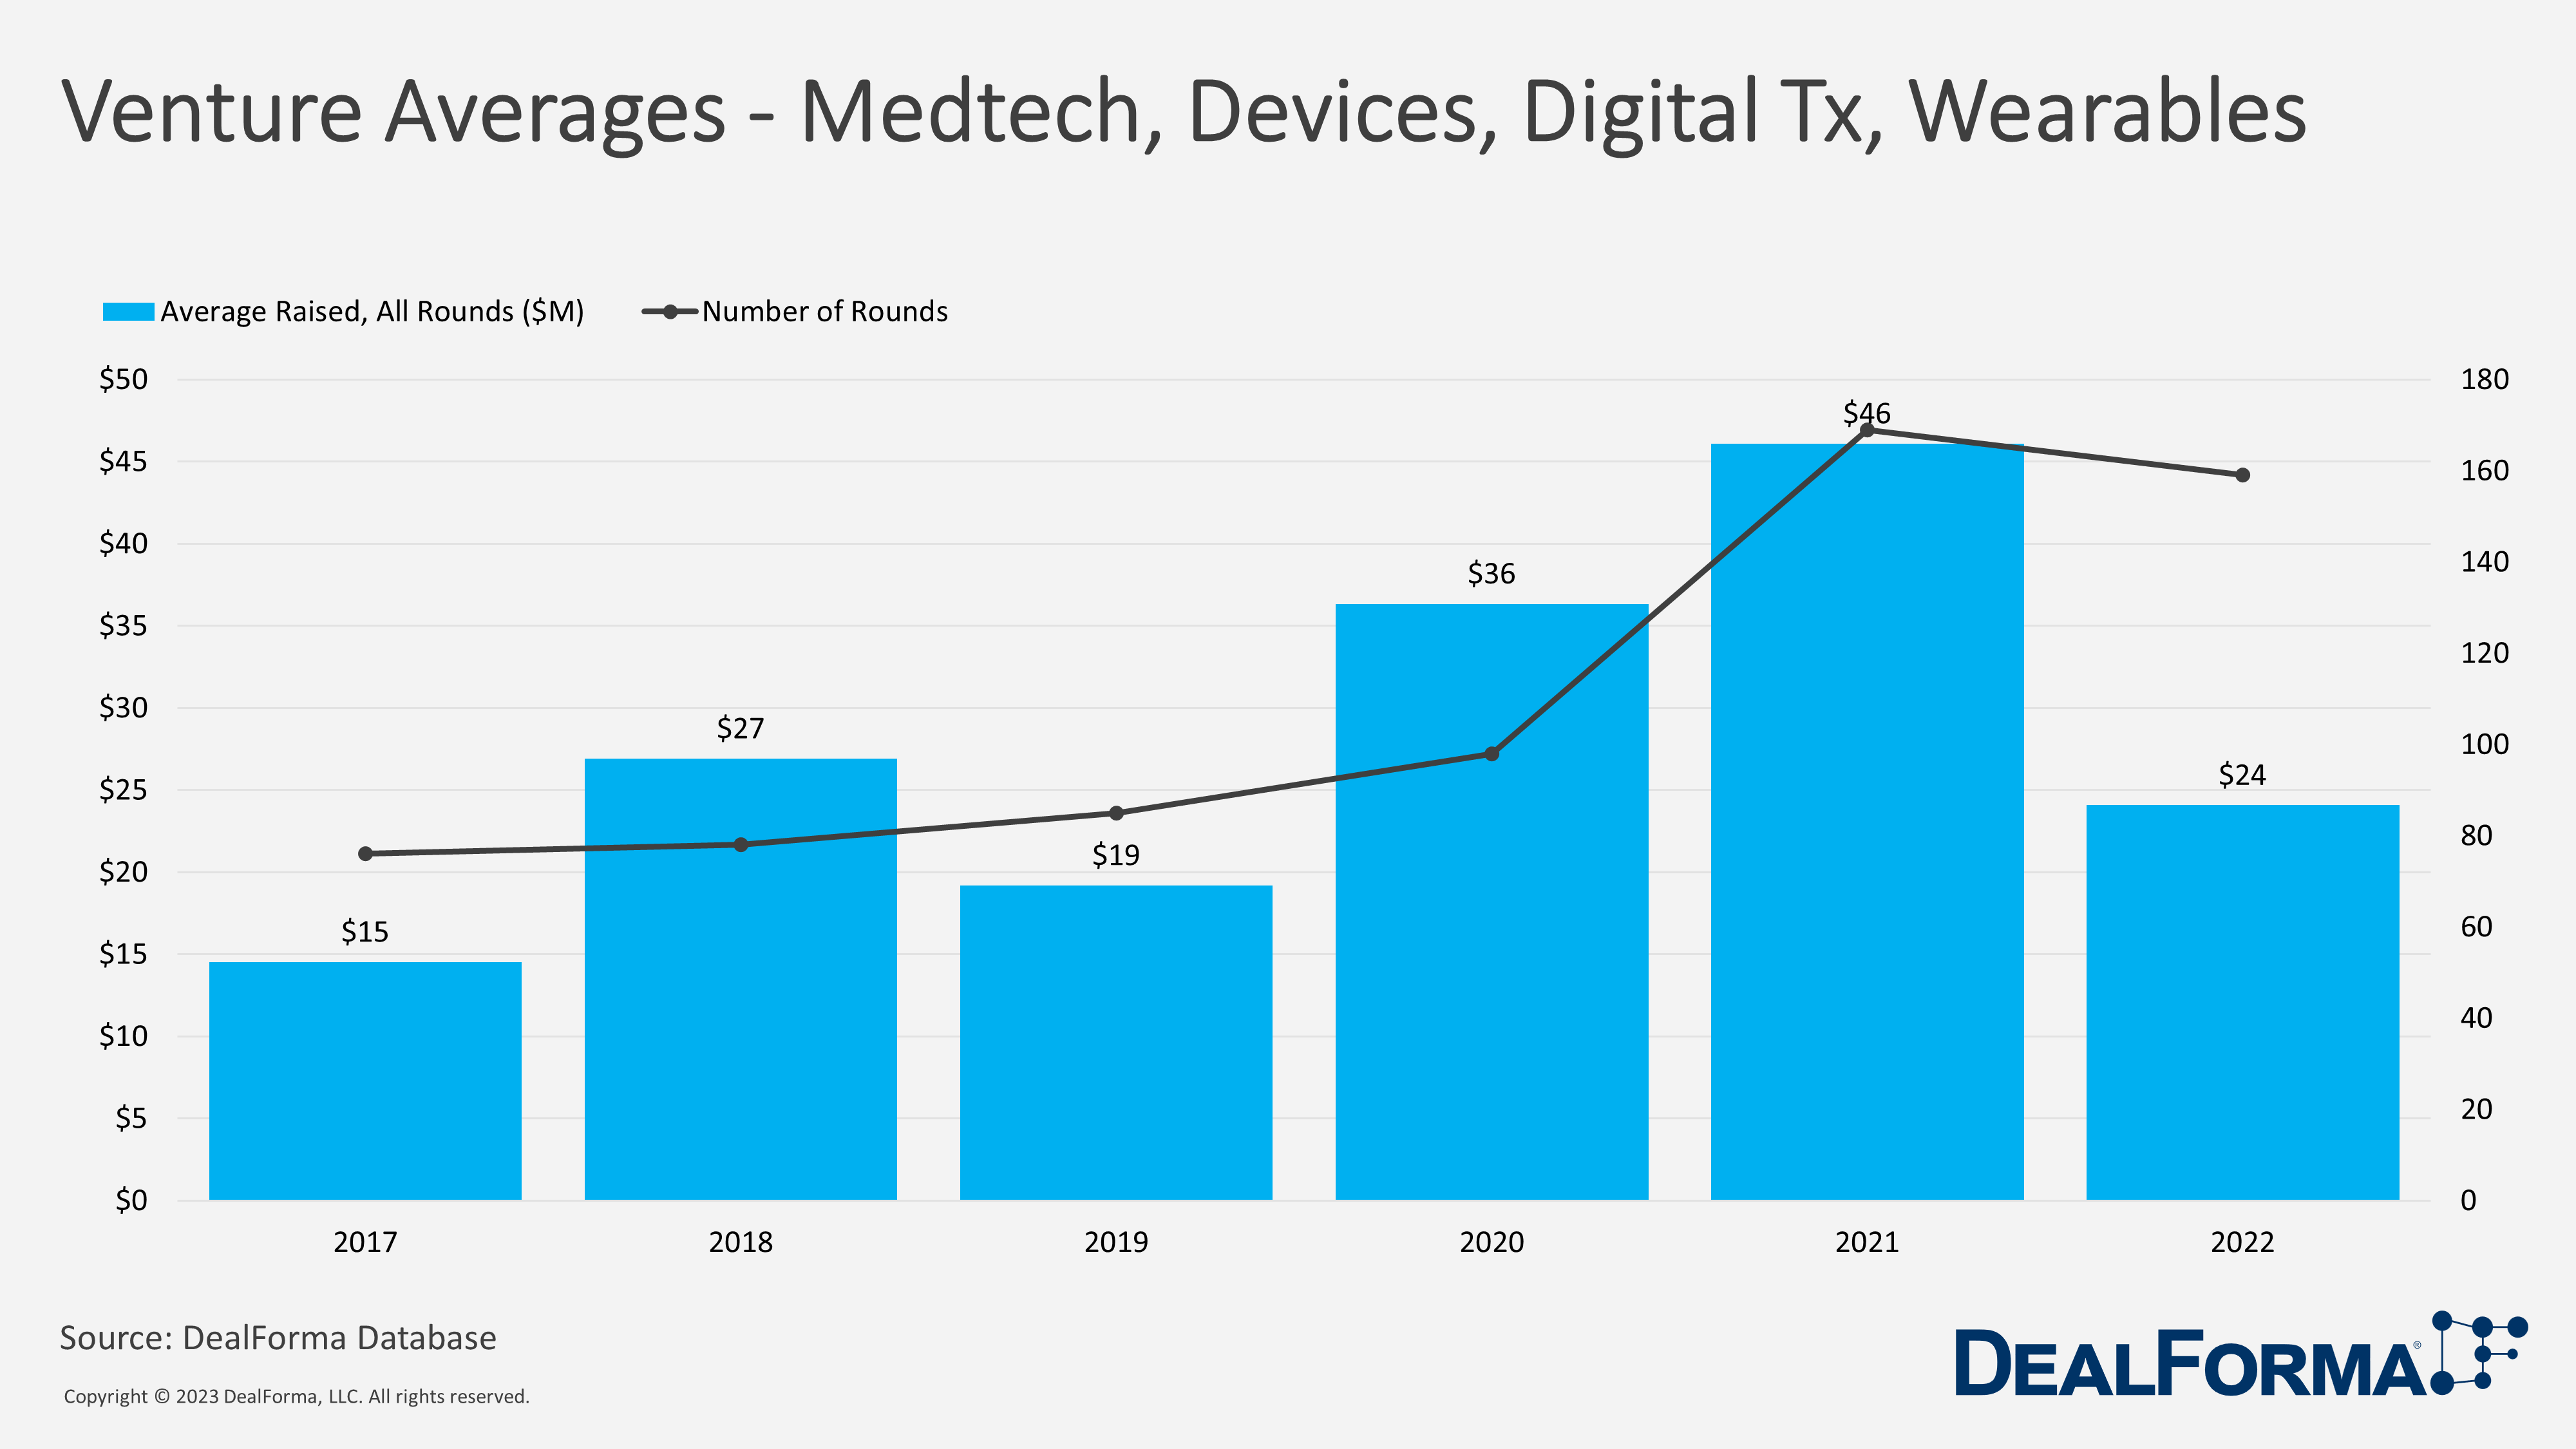 Venture Averages - Medtech, Devices, Digital Tx, Wearables